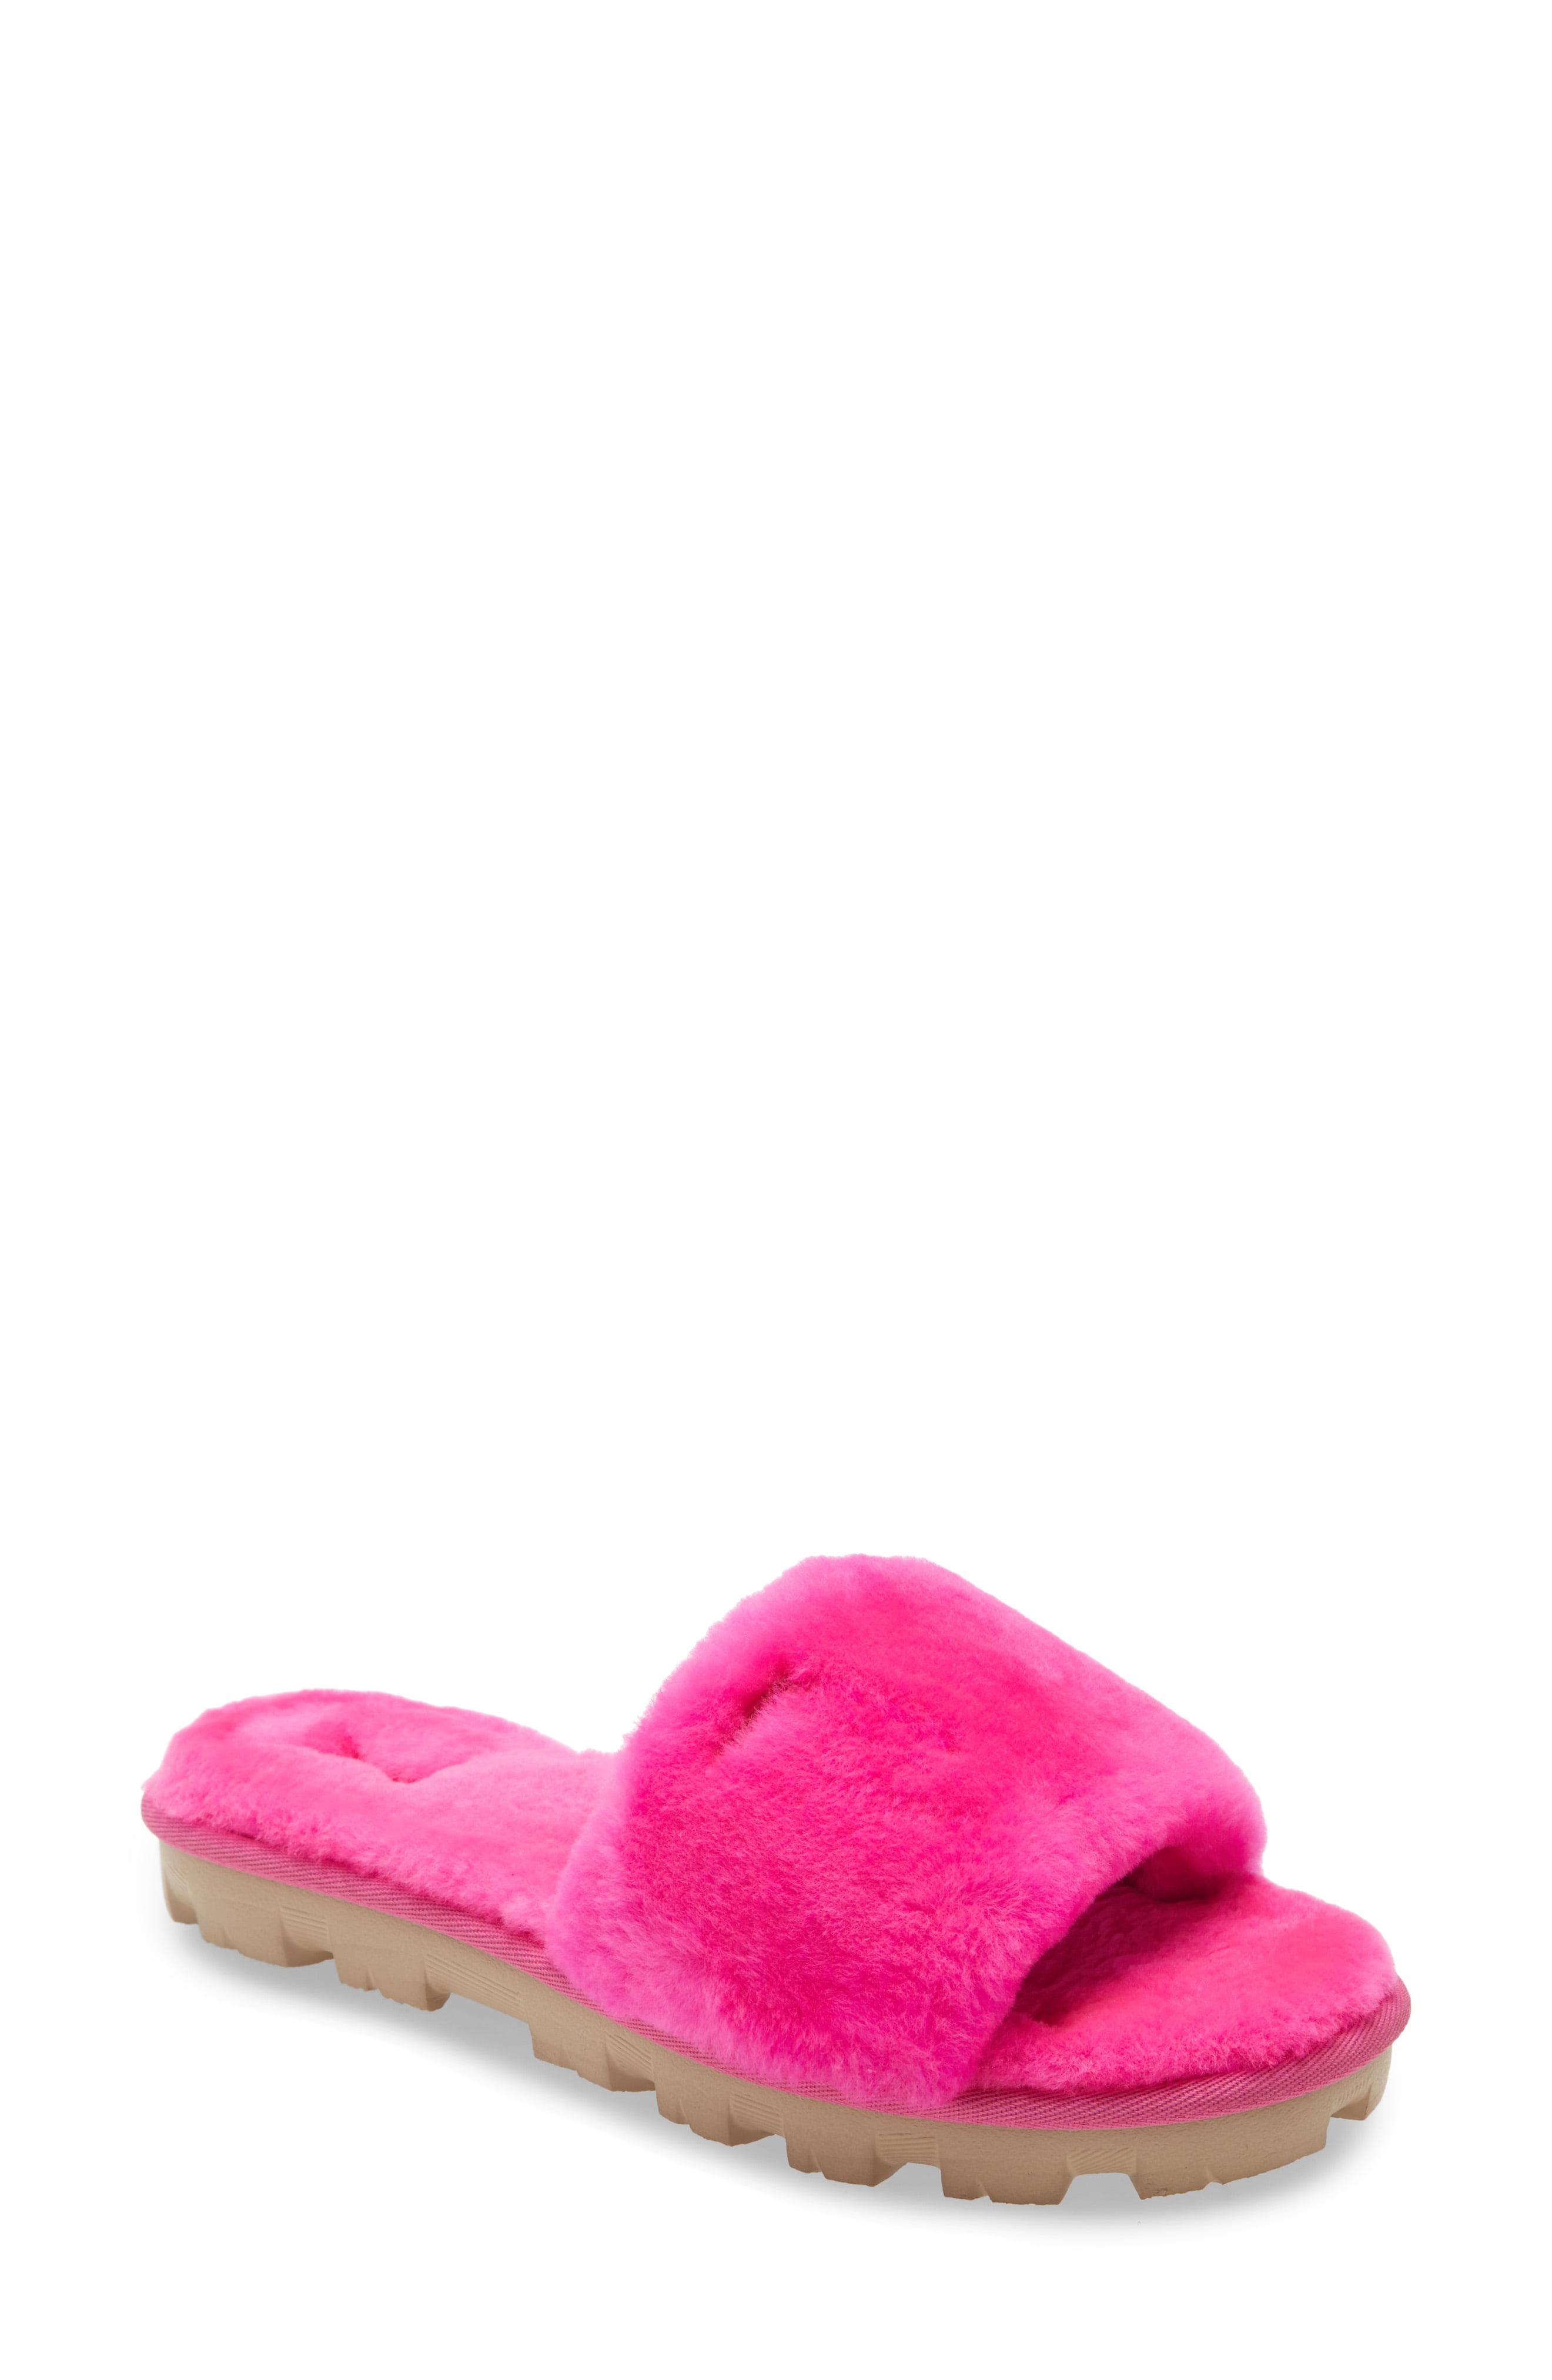 UGG Wool UGG Cozette Genuine Shearling Slipper in Pink - Lyst